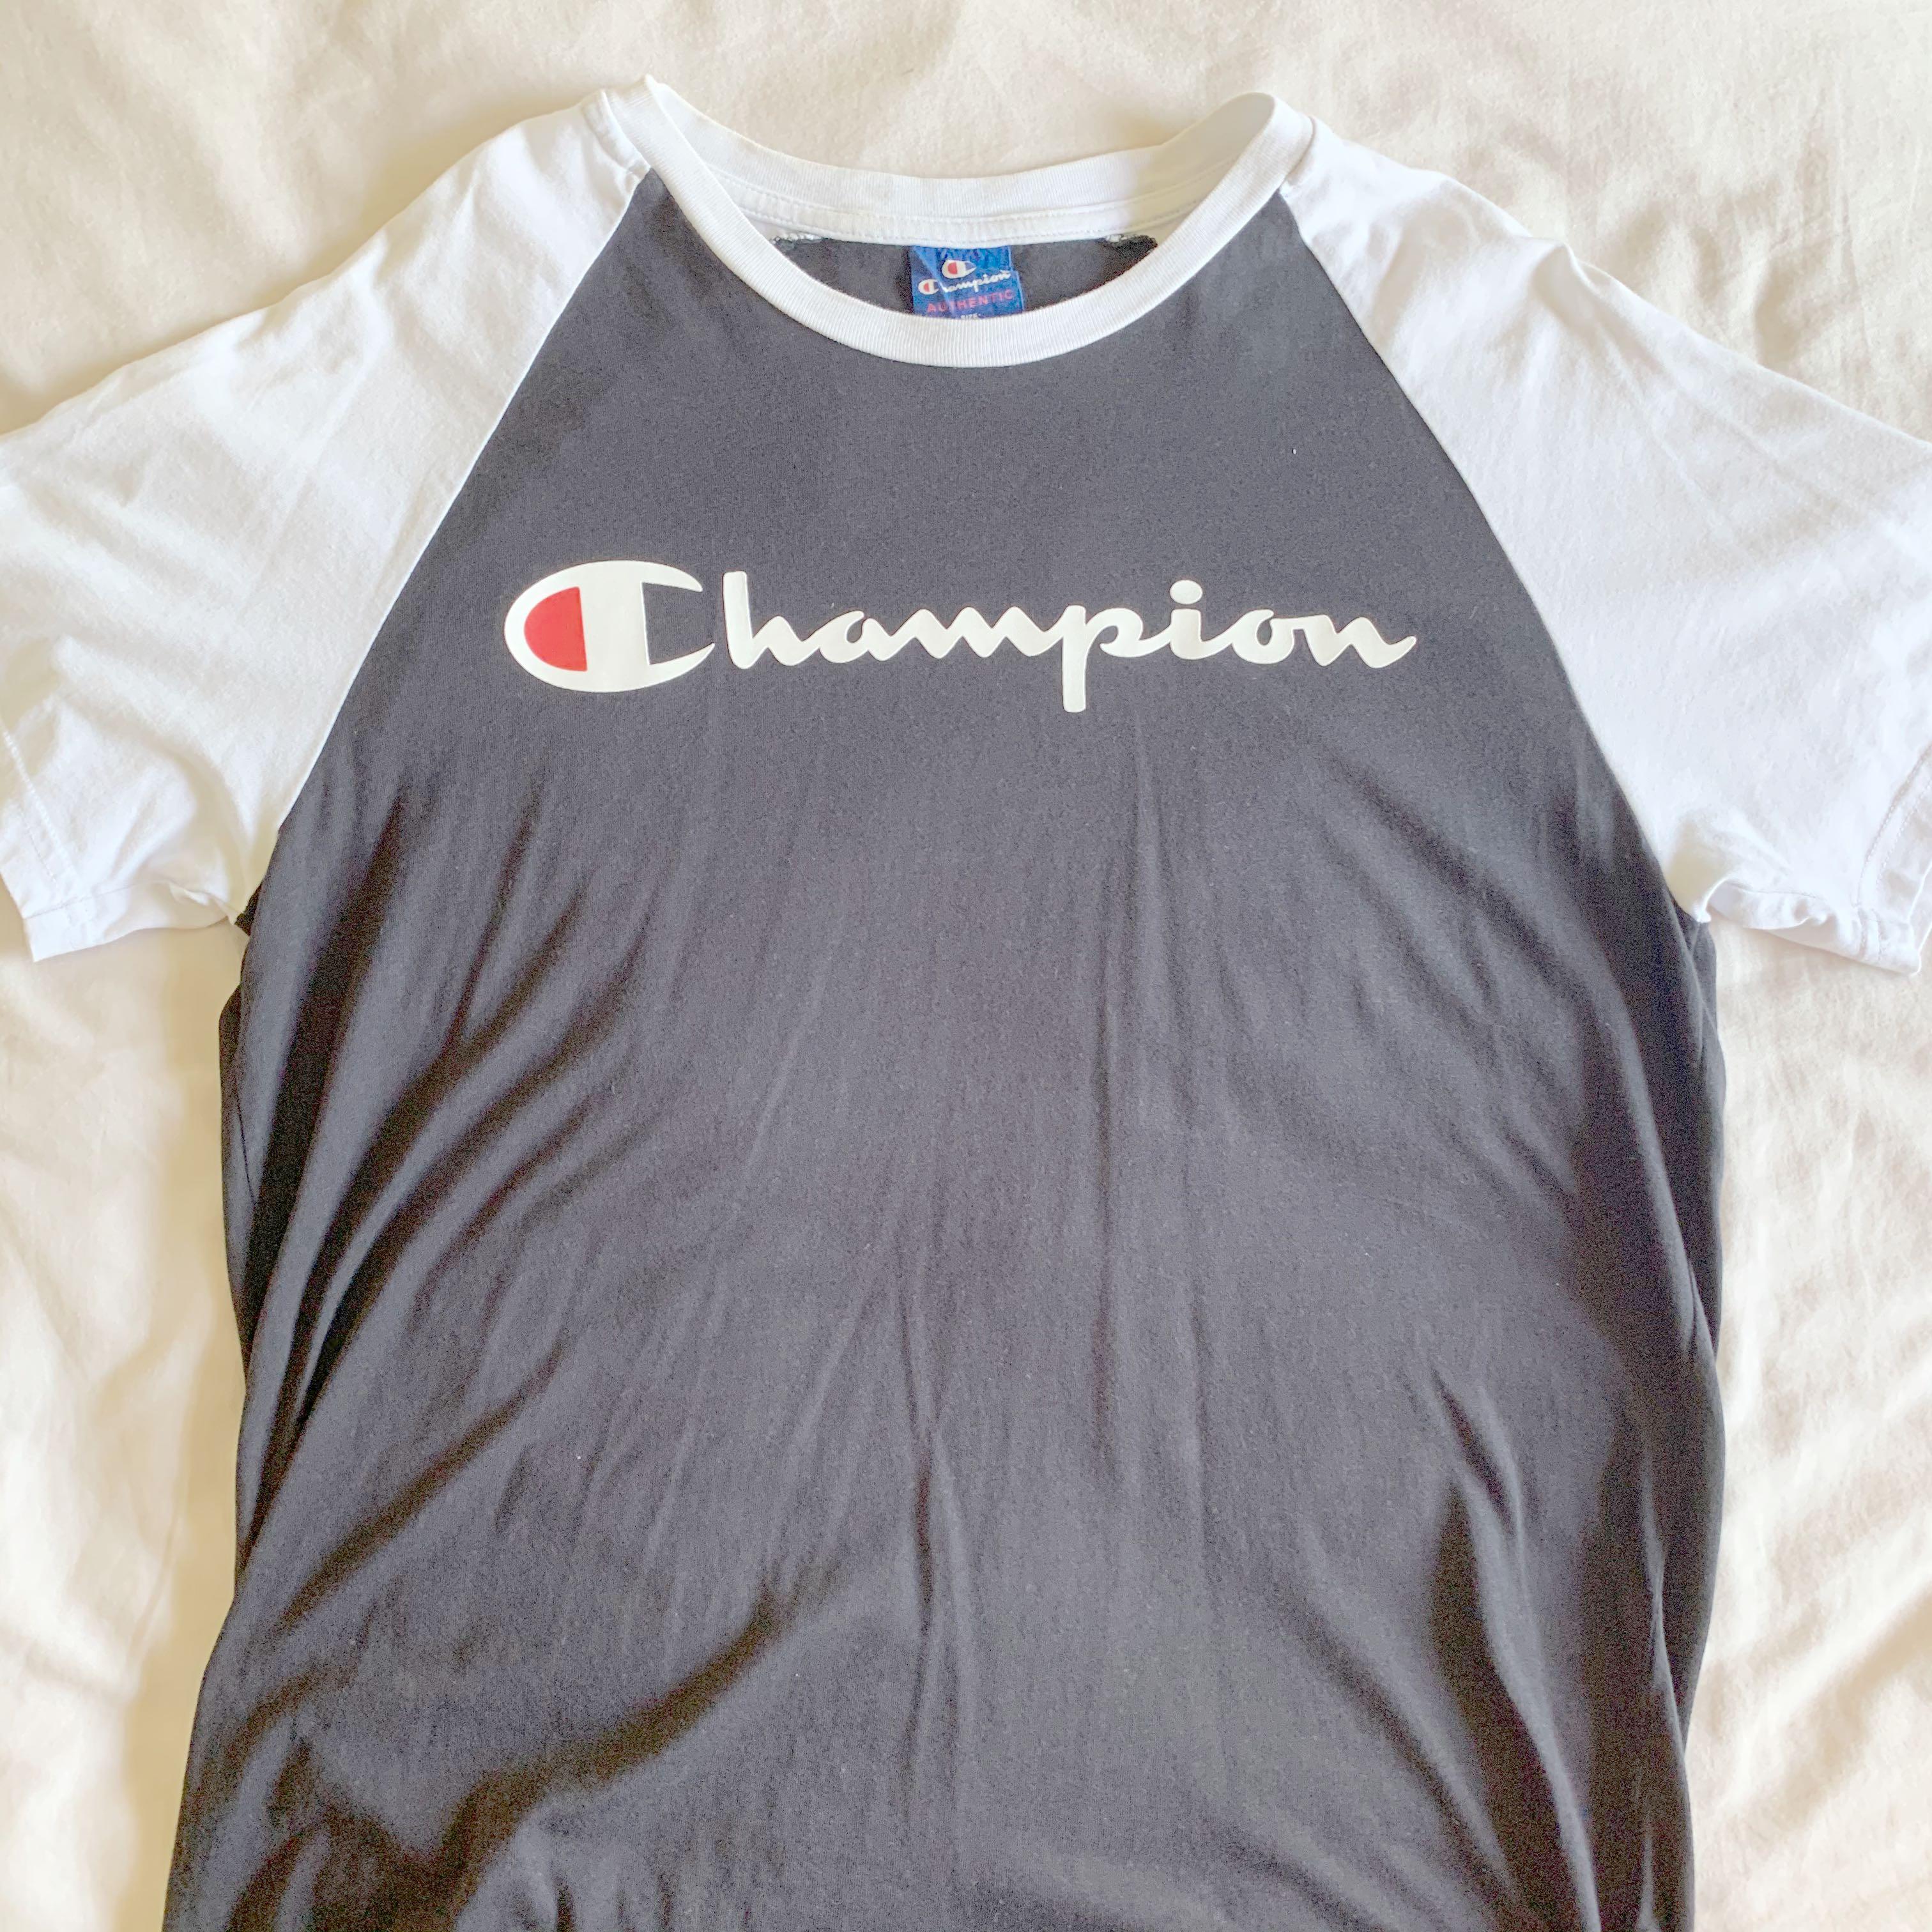 fbb champion t shirts